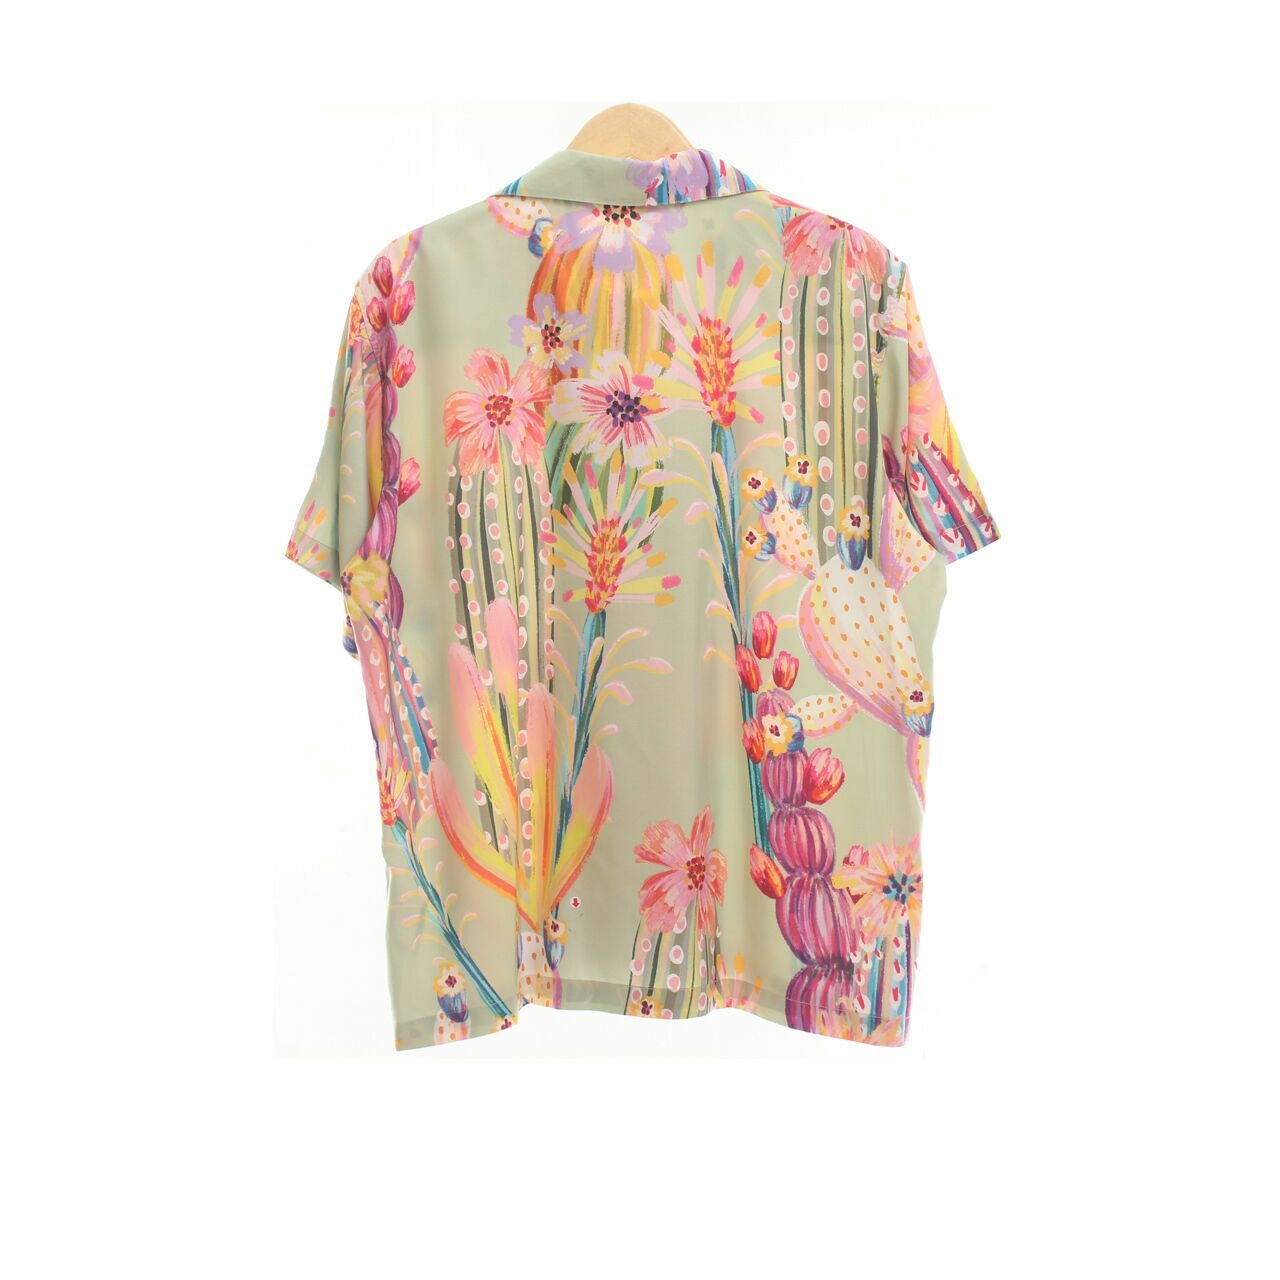 K.A.L.A studio x MADER Multi Floral Shirt